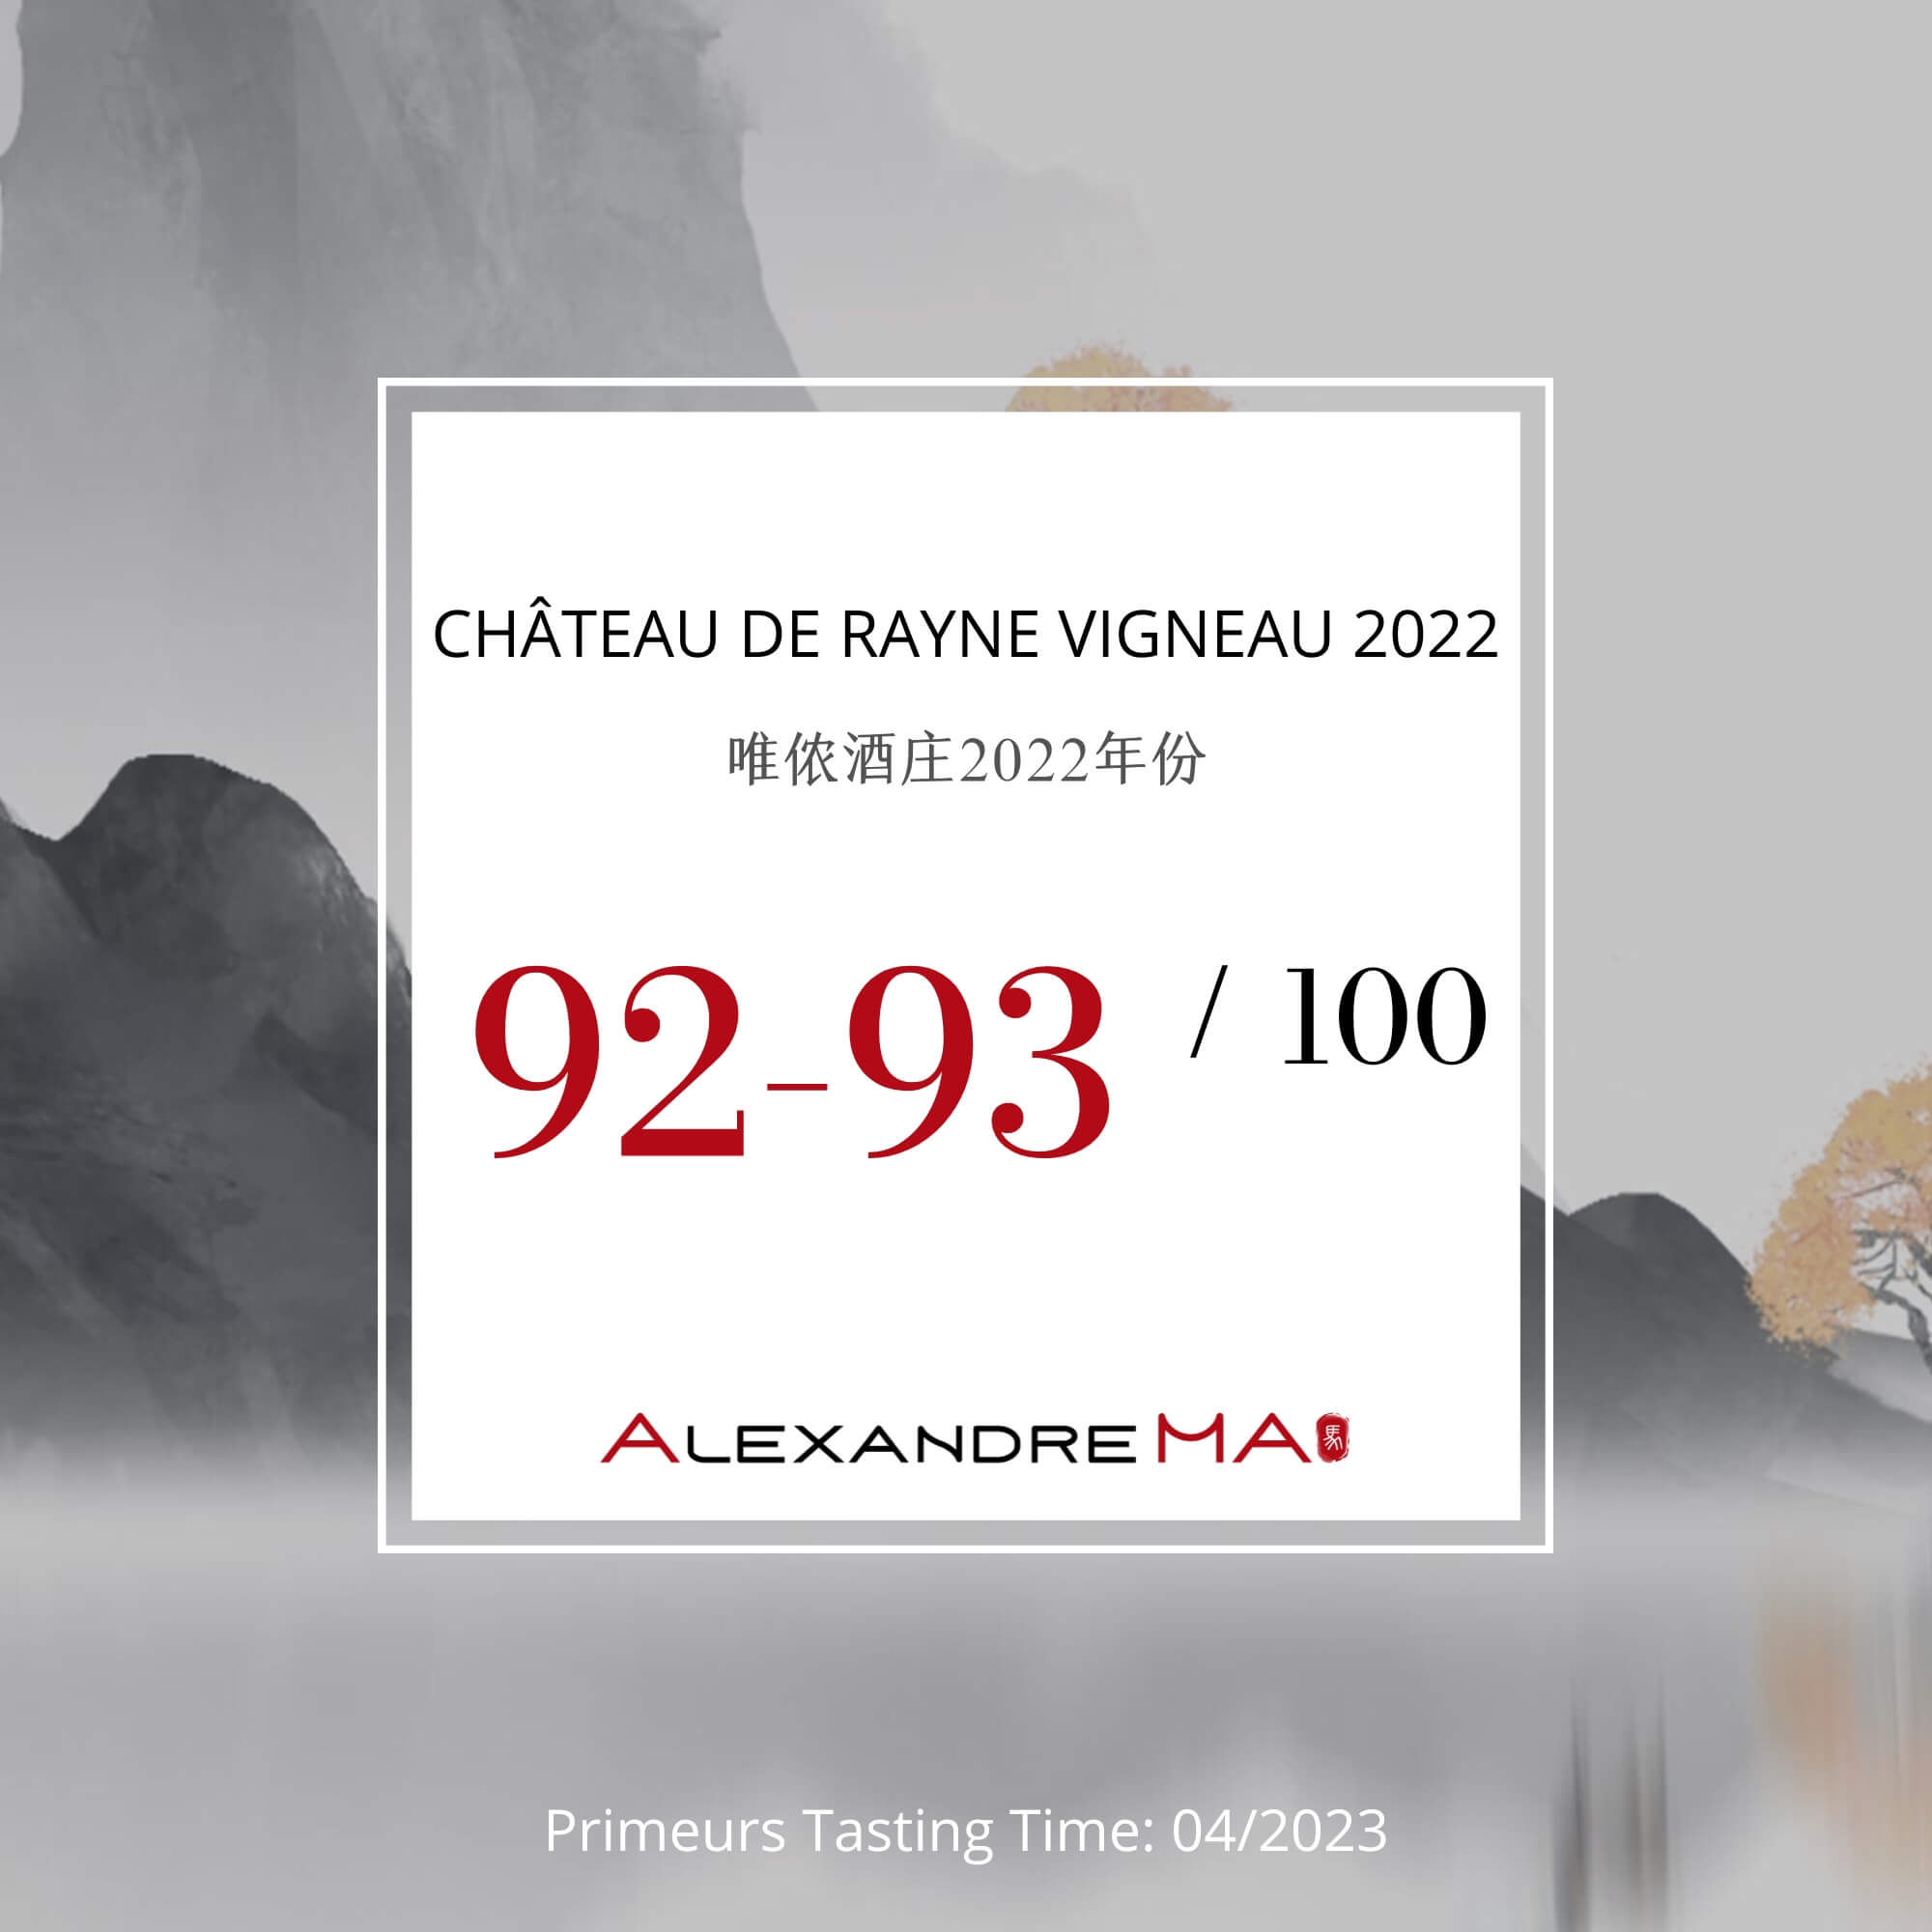 Château de Rayne Vigneau 2022 Primeurs 唯侬酒庄 - Alexandre Ma